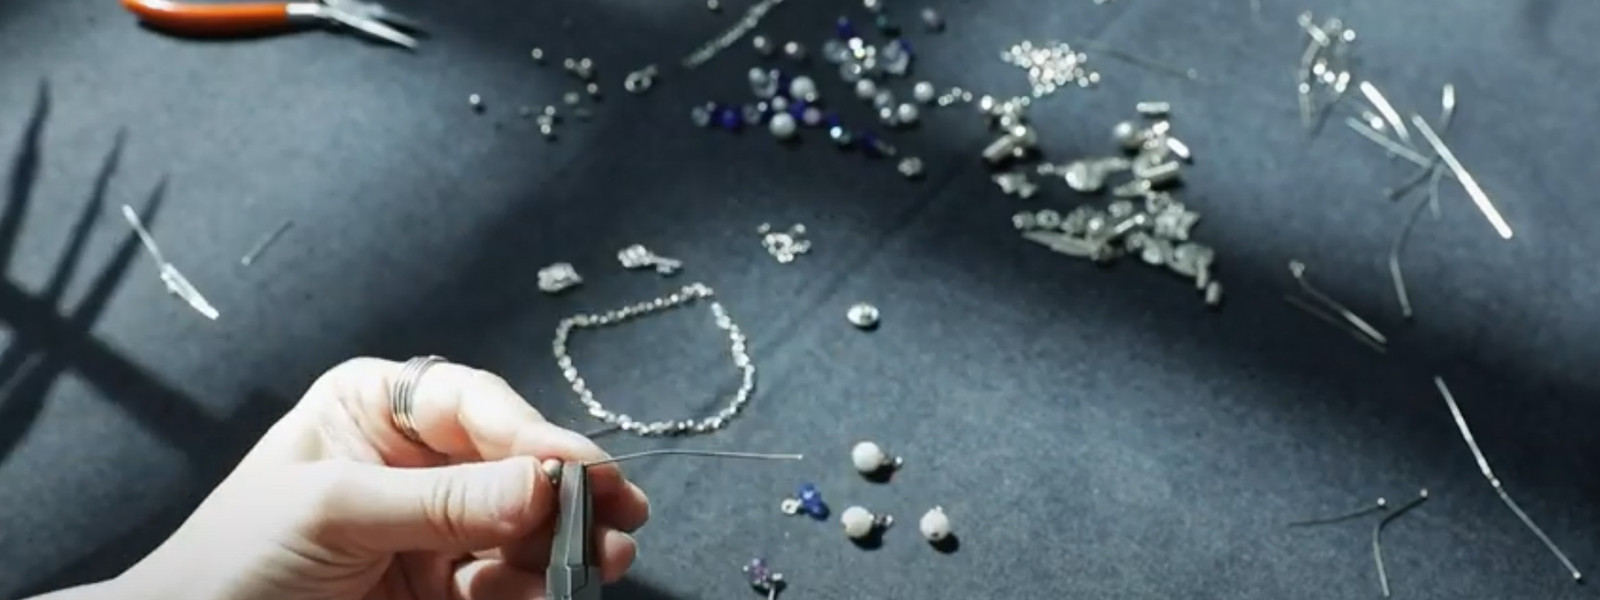 Tutorials - Jewellery Making: Make your own Bracelet